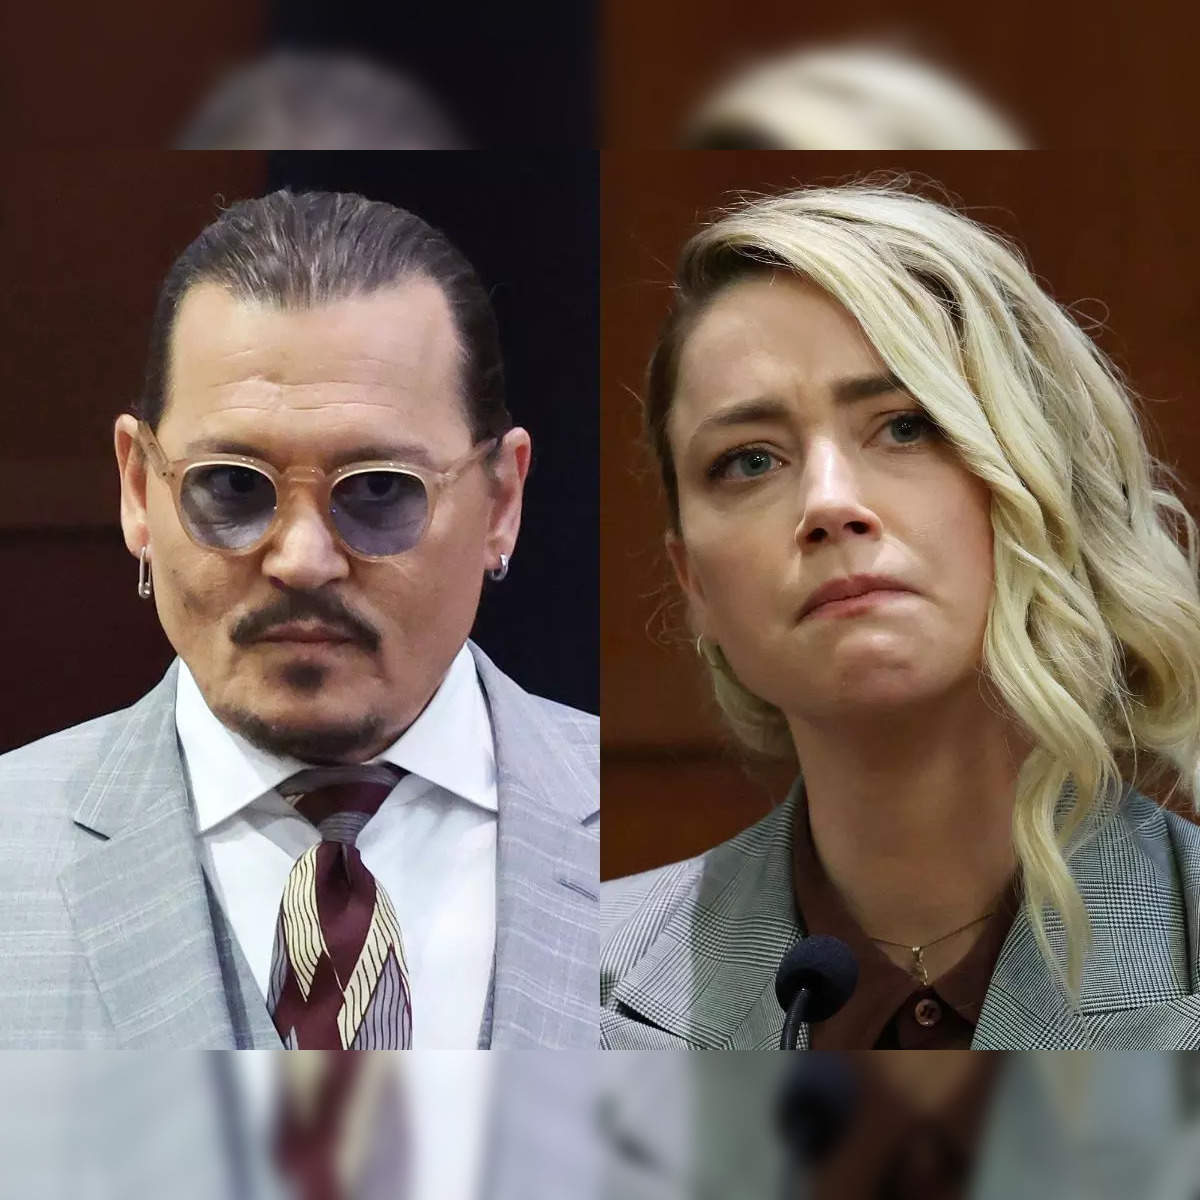 Série Johnny Depp x Amber Heard